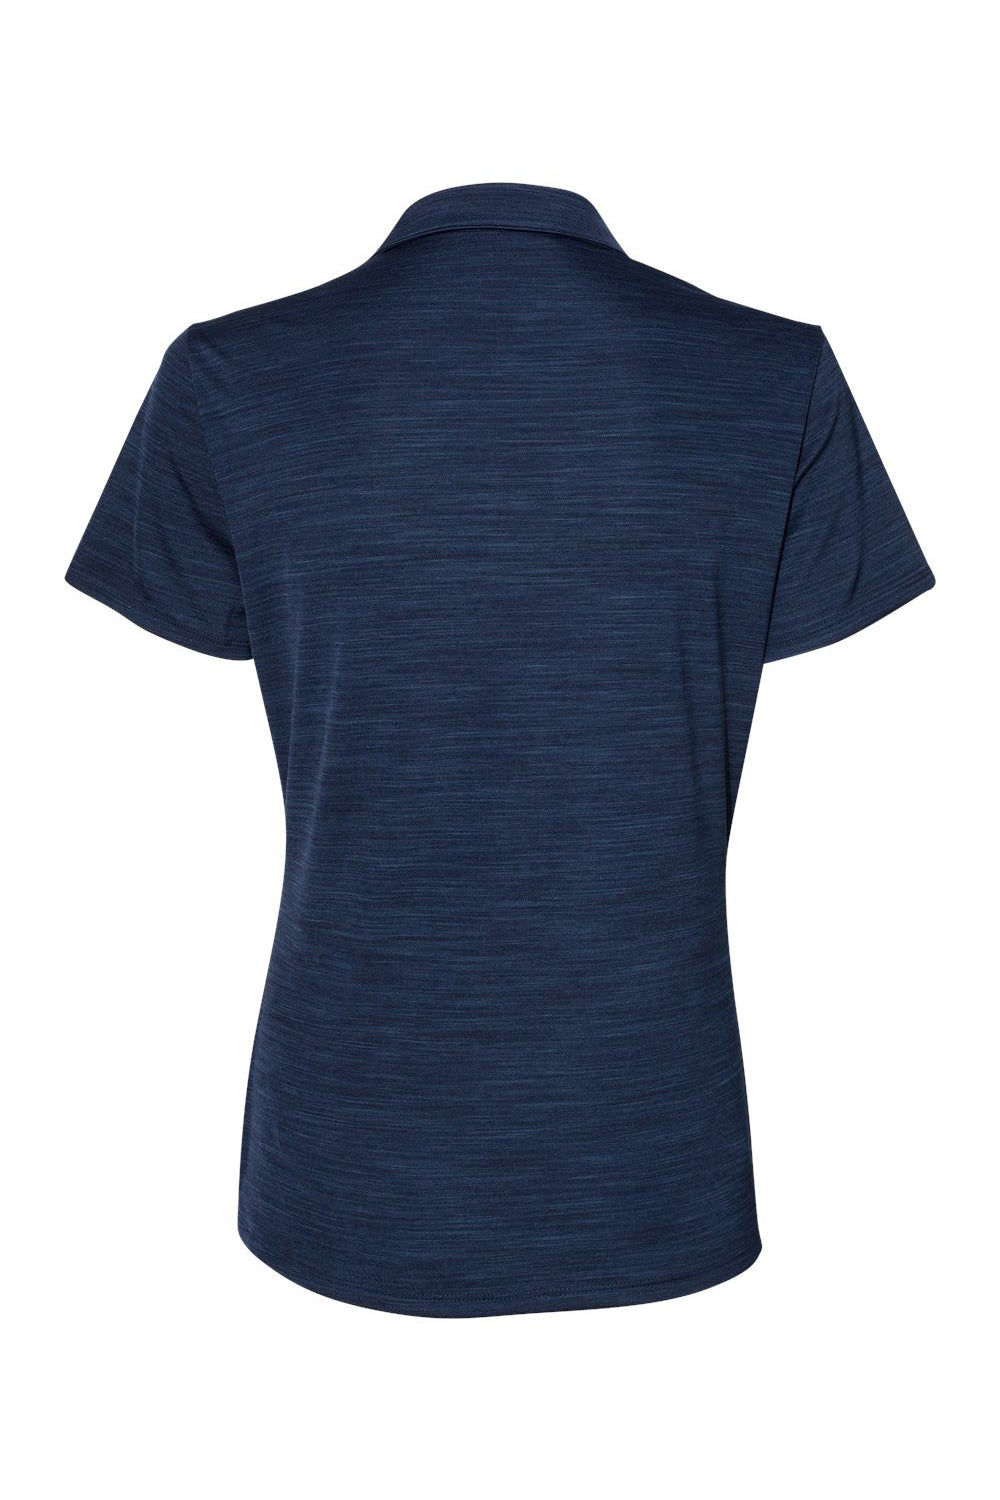 Adidas A403 Womens Melange Short Sleeve Polo Shirt Collegiate Navy Blue Melange Flat Back